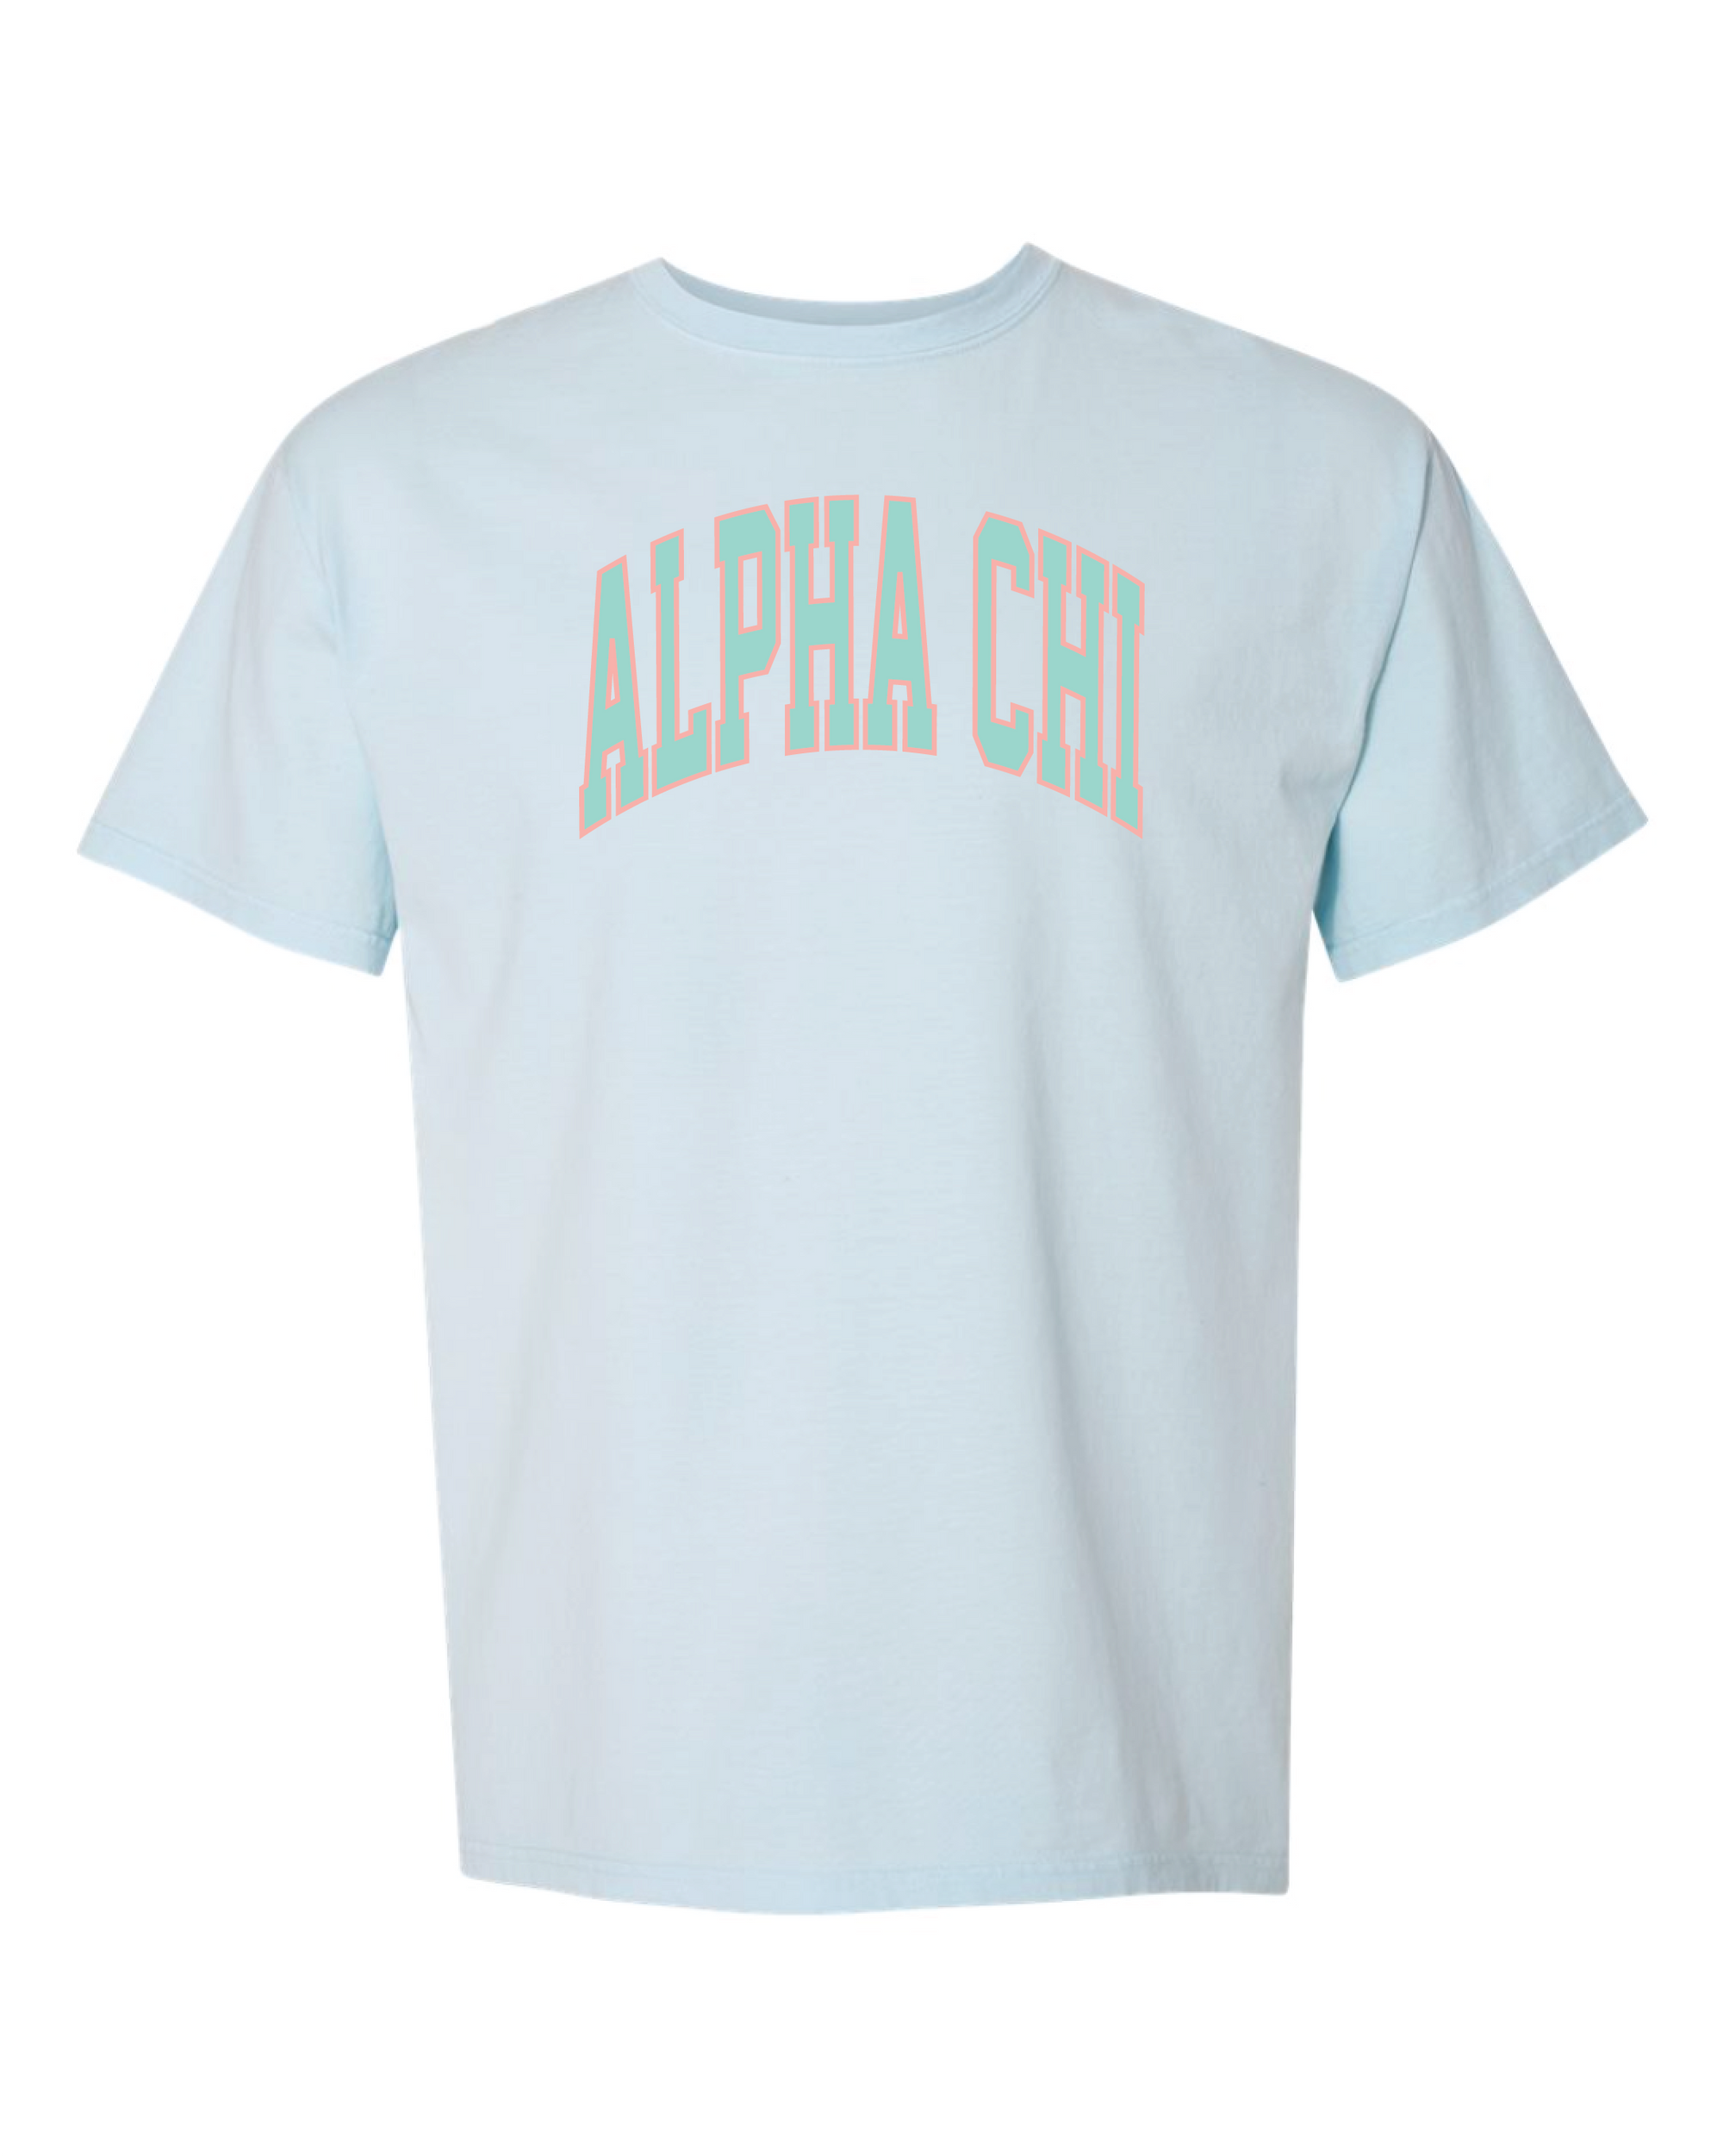 Alpha Chi Varsity Letters Tshirt